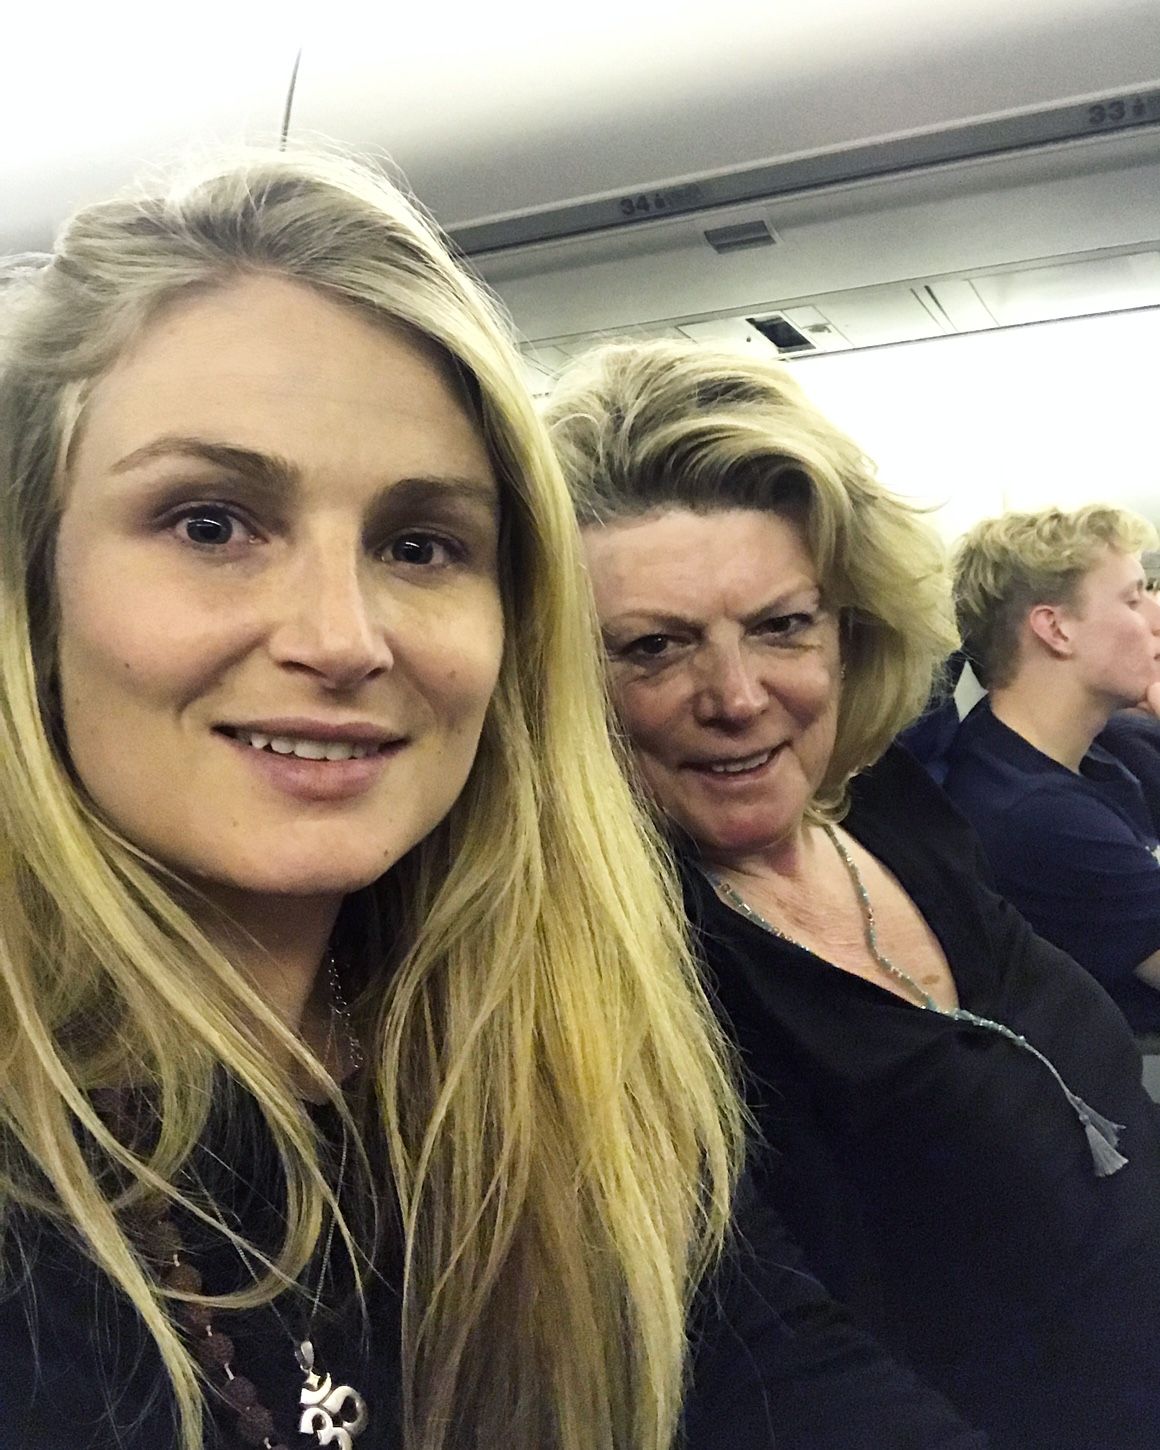 mum and i on the plane selfie.JPG